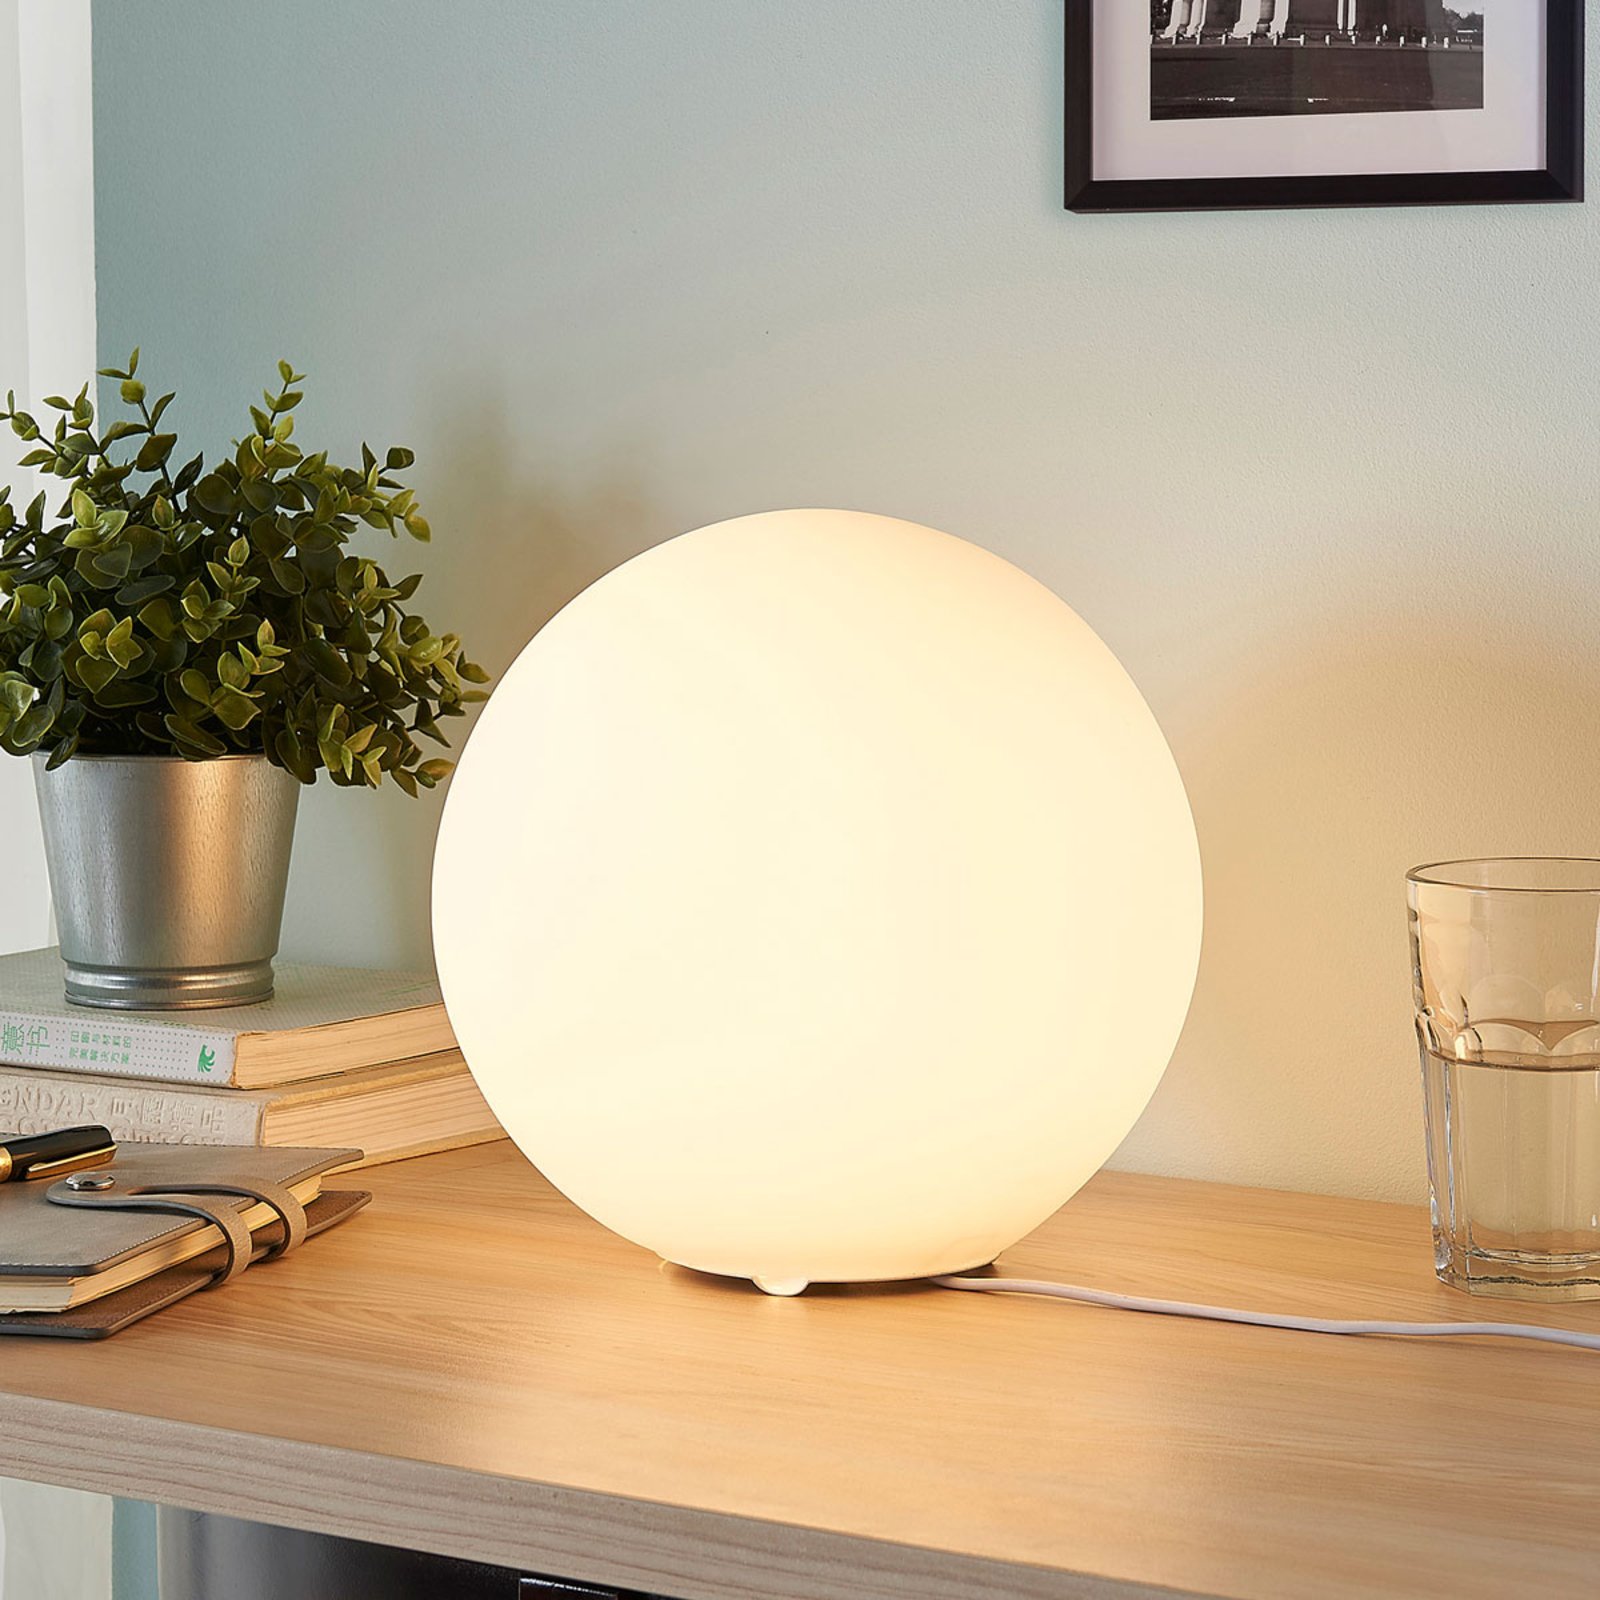 Bolvormige tafellamp Marike, wit | Lampen24.be